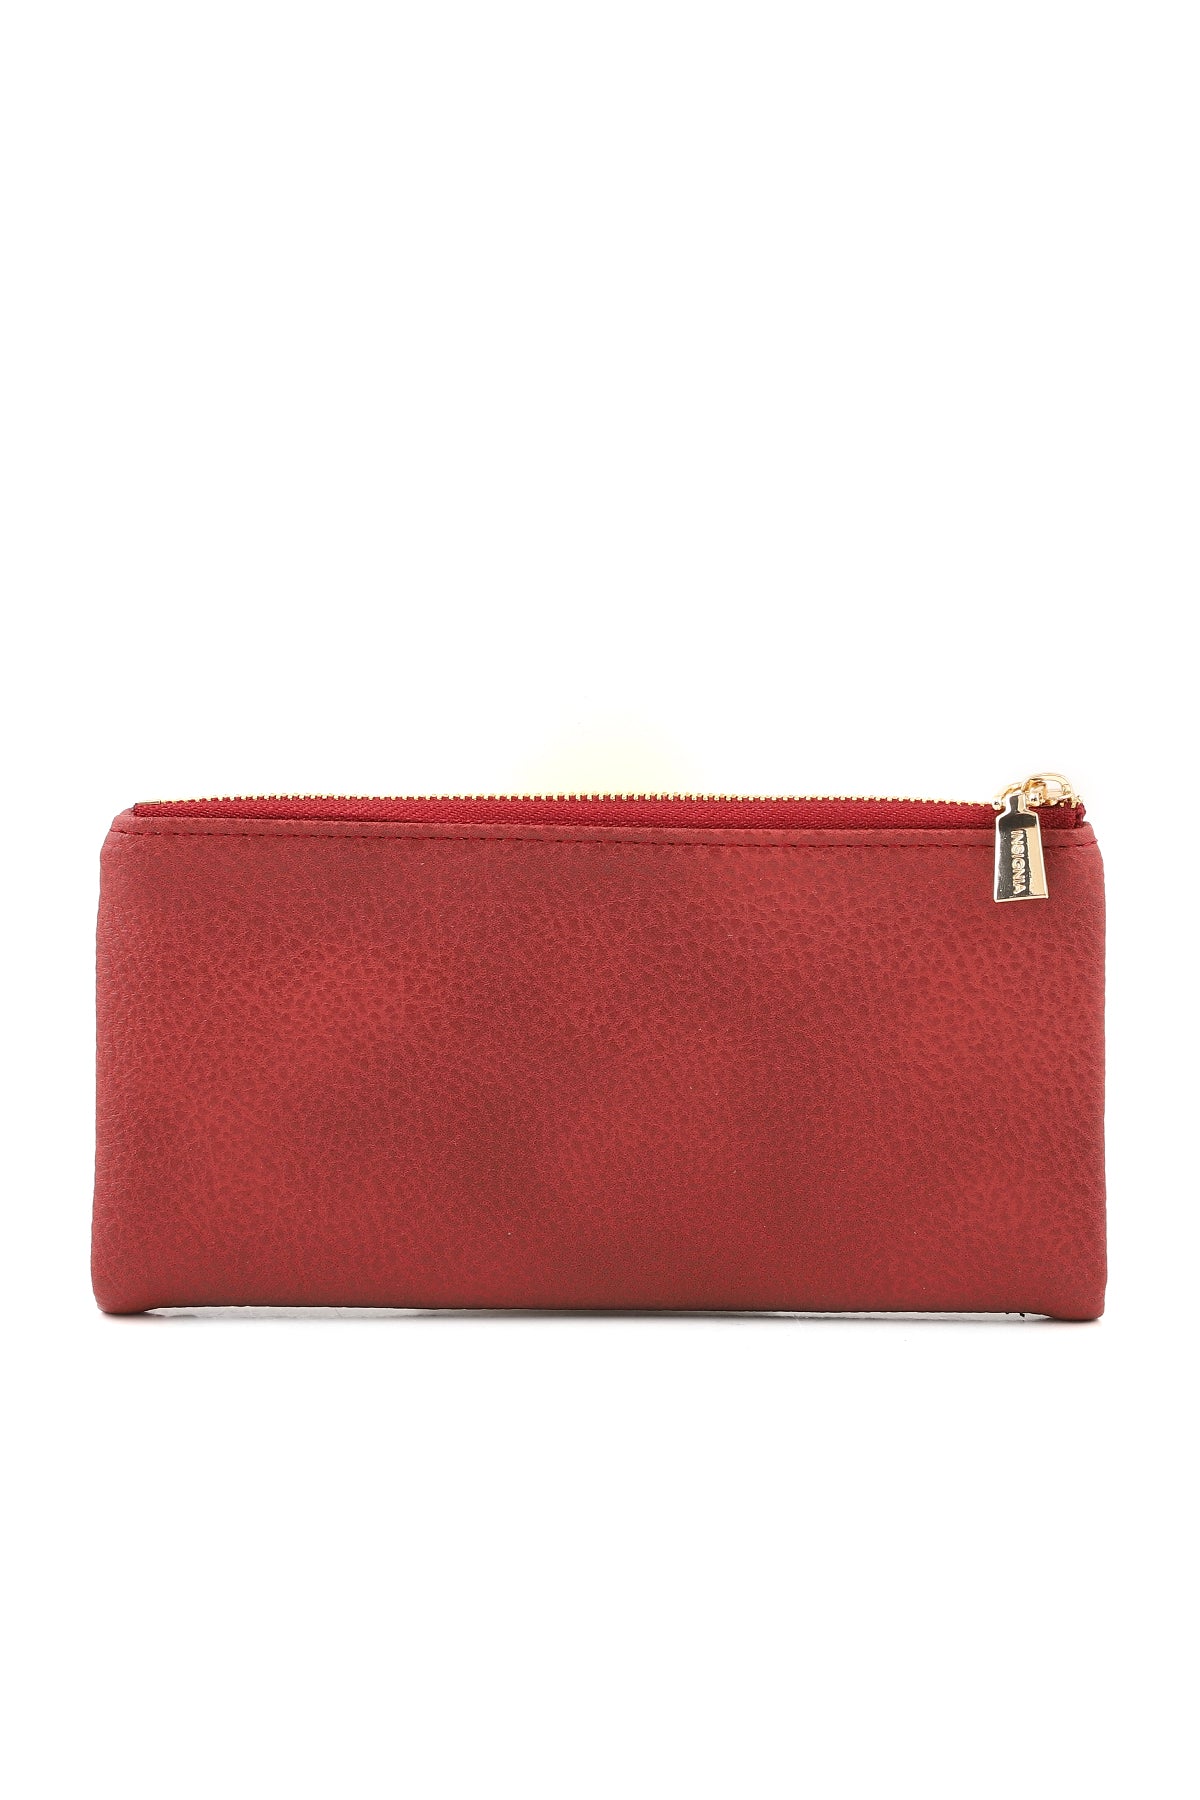 Wristlet Wallet B26039-Red